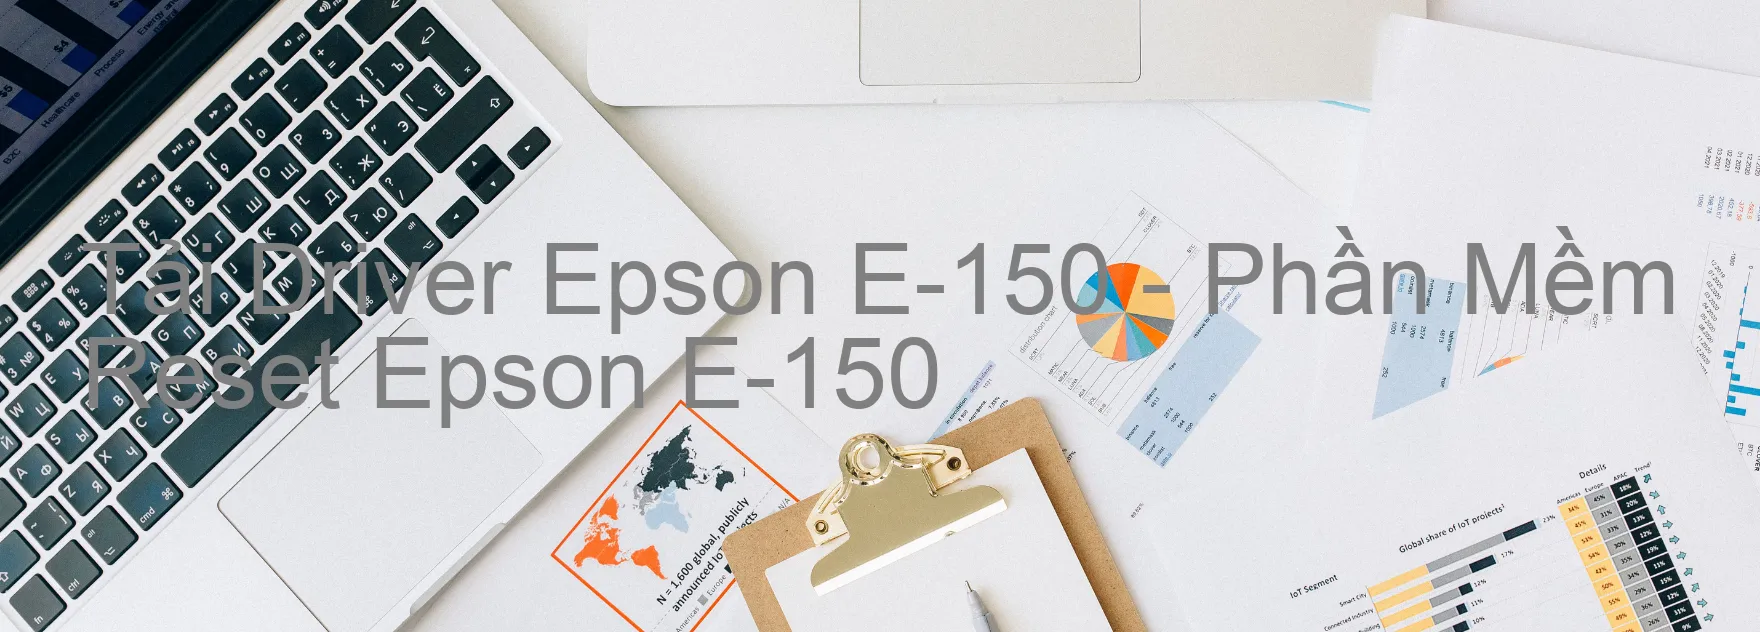 Driver Epson E-150, Phần Mềm Reset Epson E-150